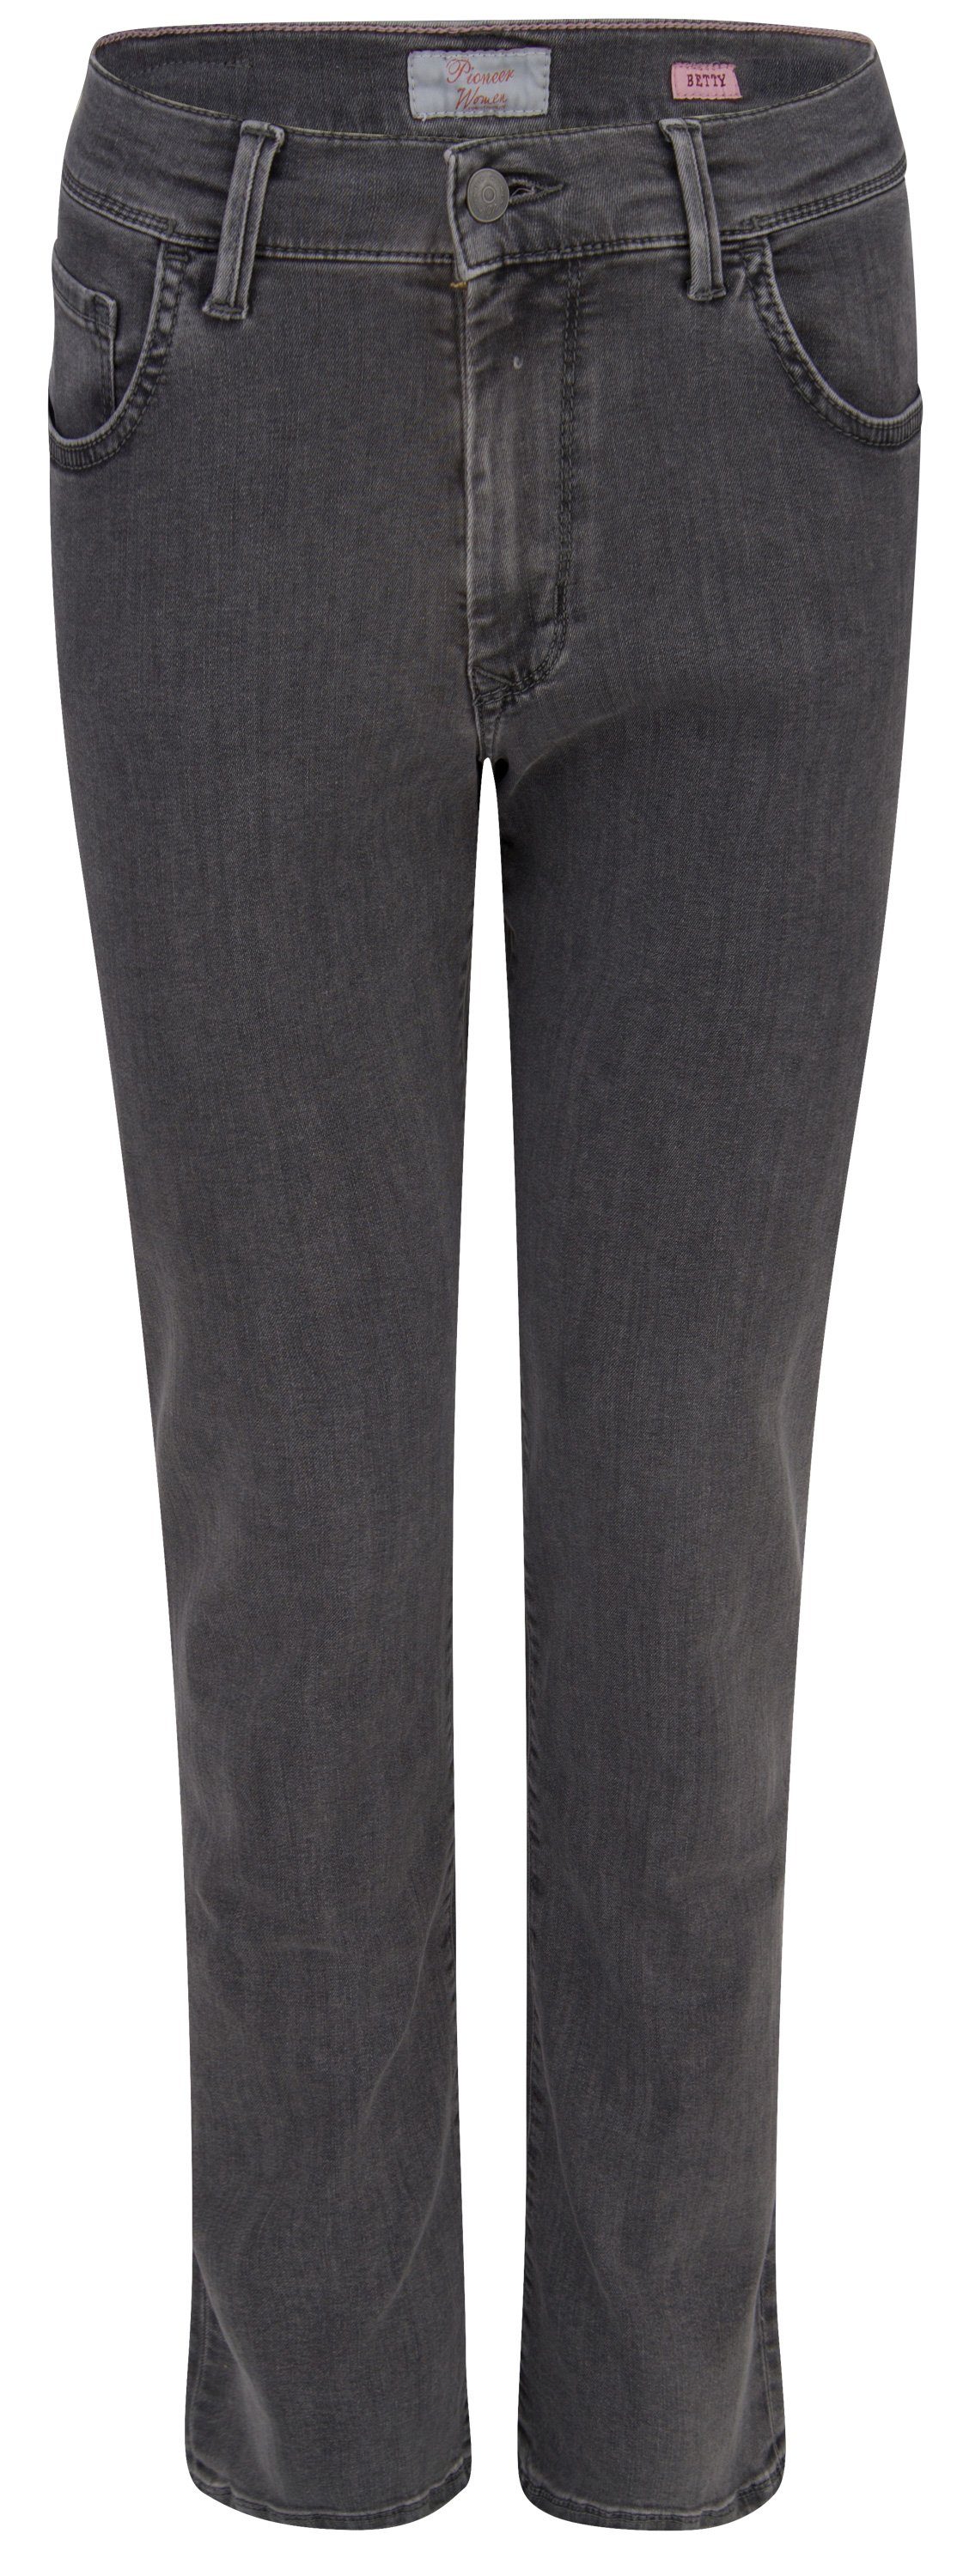 Pioneer Authentic Jeans Stretch-Jeans BETTY grey POWERSTRETCH stonewash 4012 - PIONEER 3098.9831